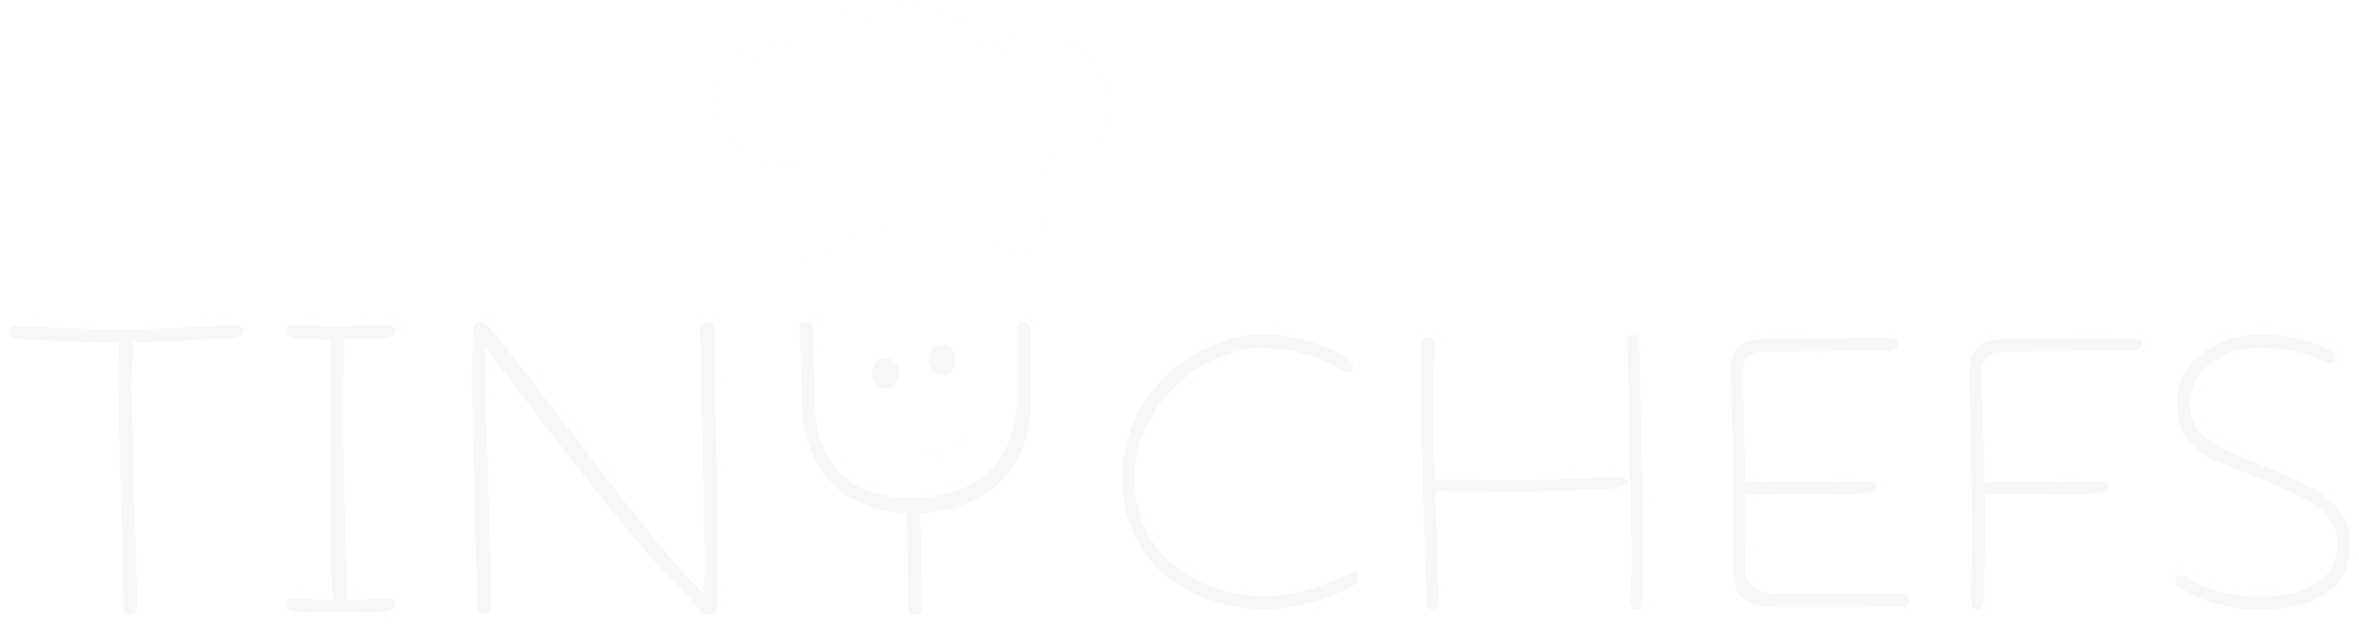 tiny-chefs-transparency-logo